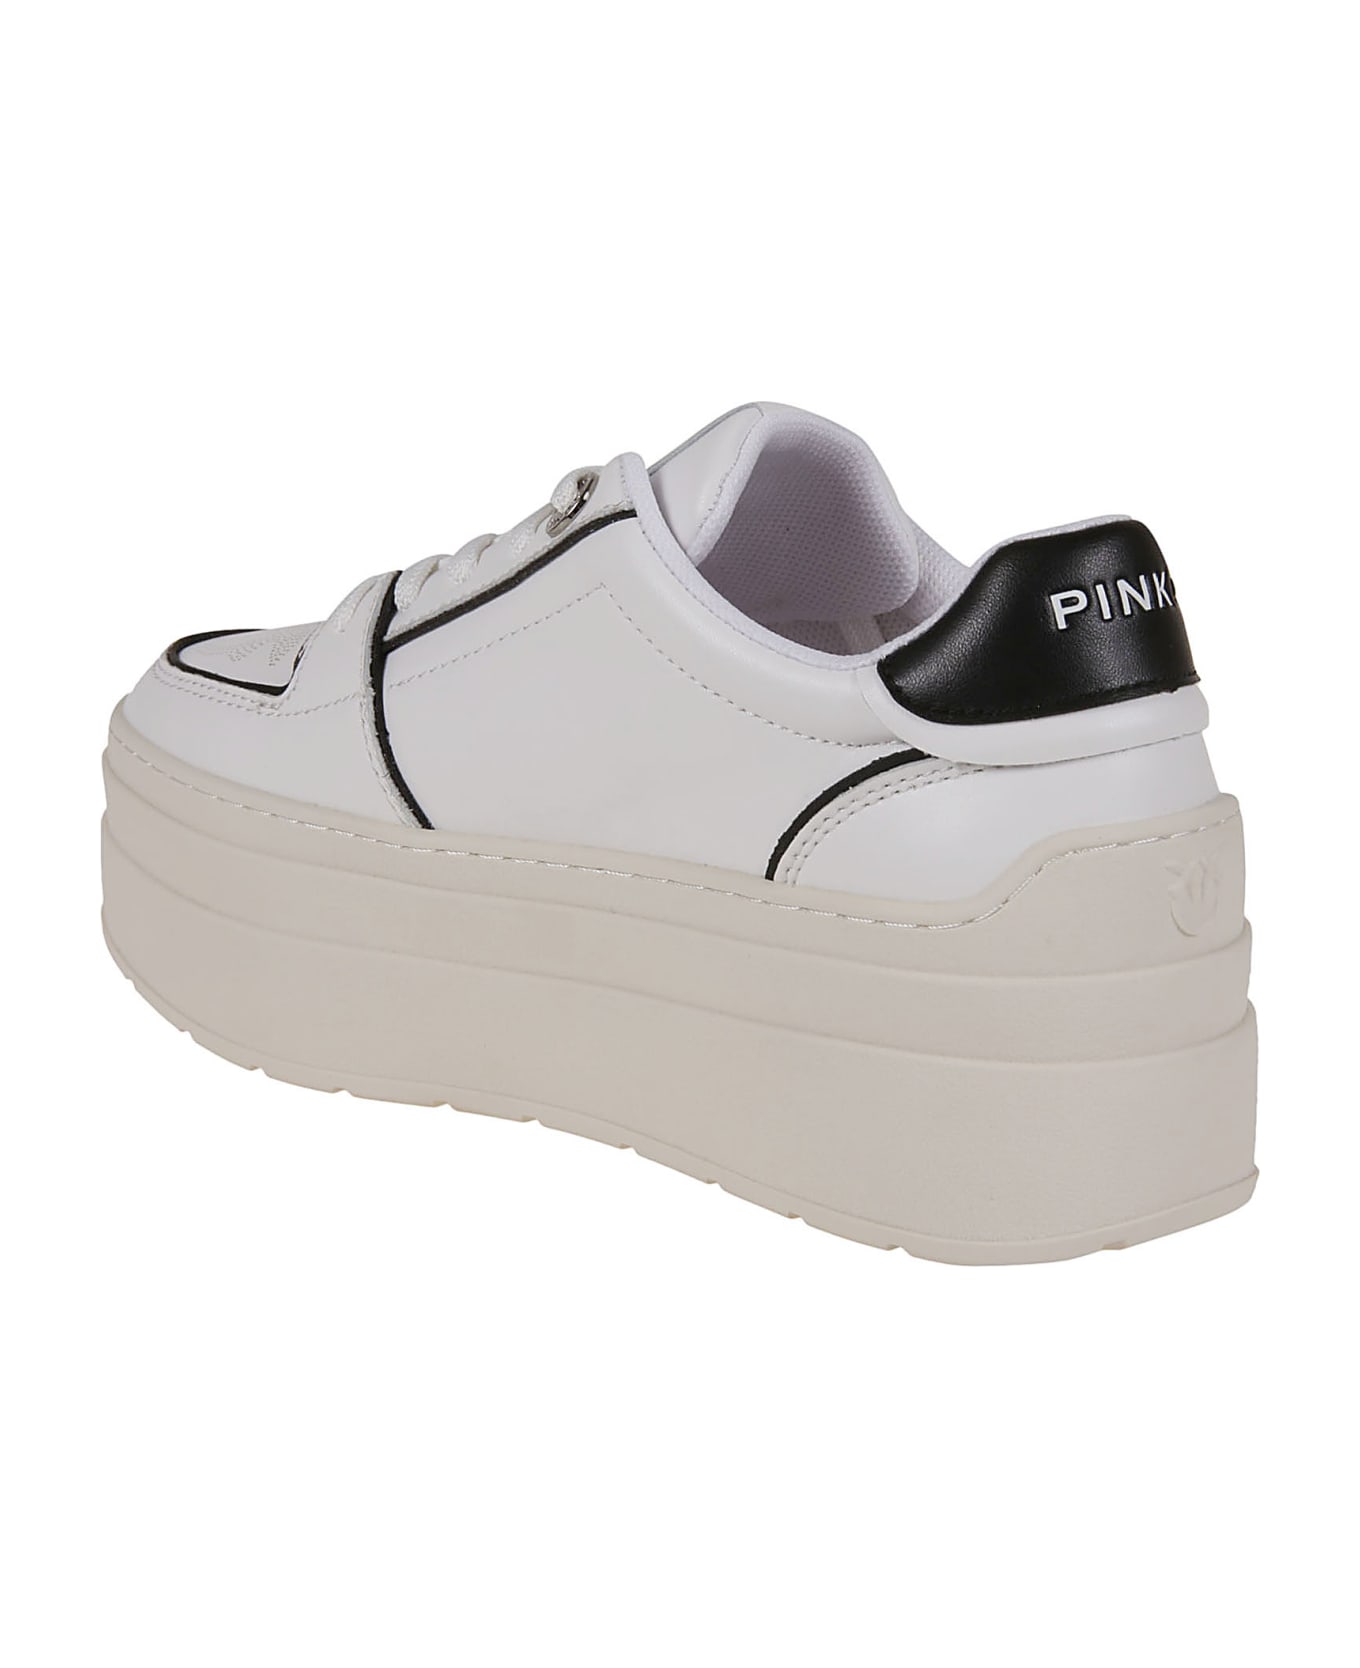 Pinko Greta 01 Calf Leather - Bianco Nero ウェッジシューズ